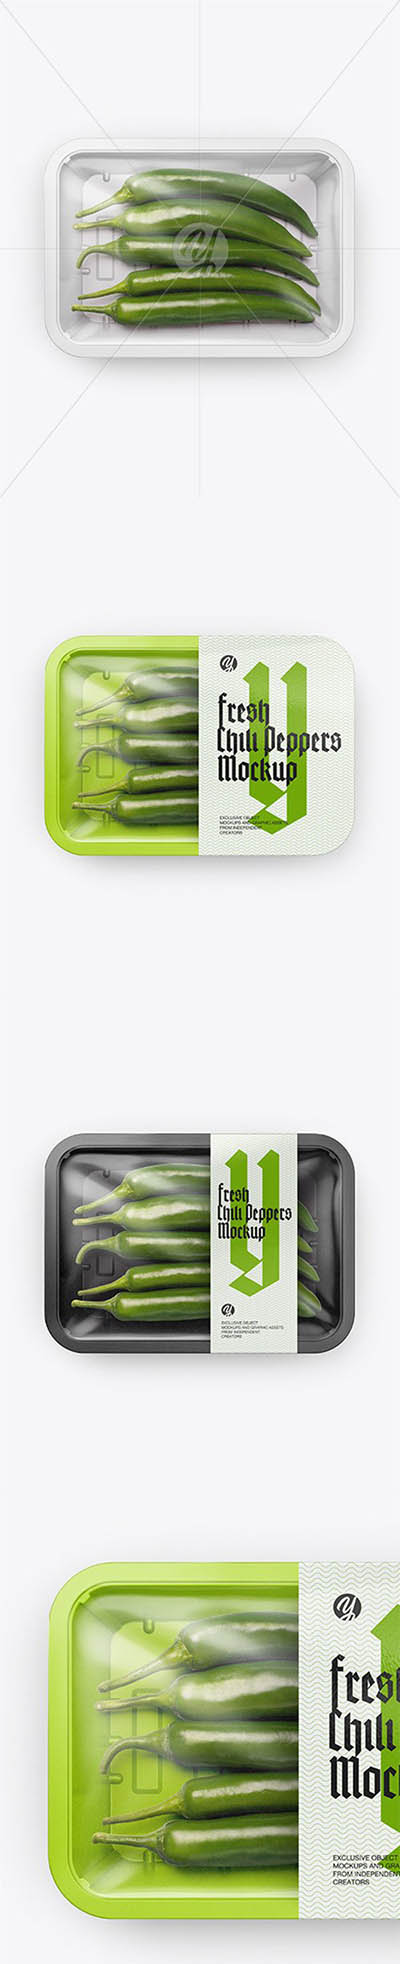 4photoshopir-packing-mockup-tray-chili-موکاپ بسته بندی سبزیجات